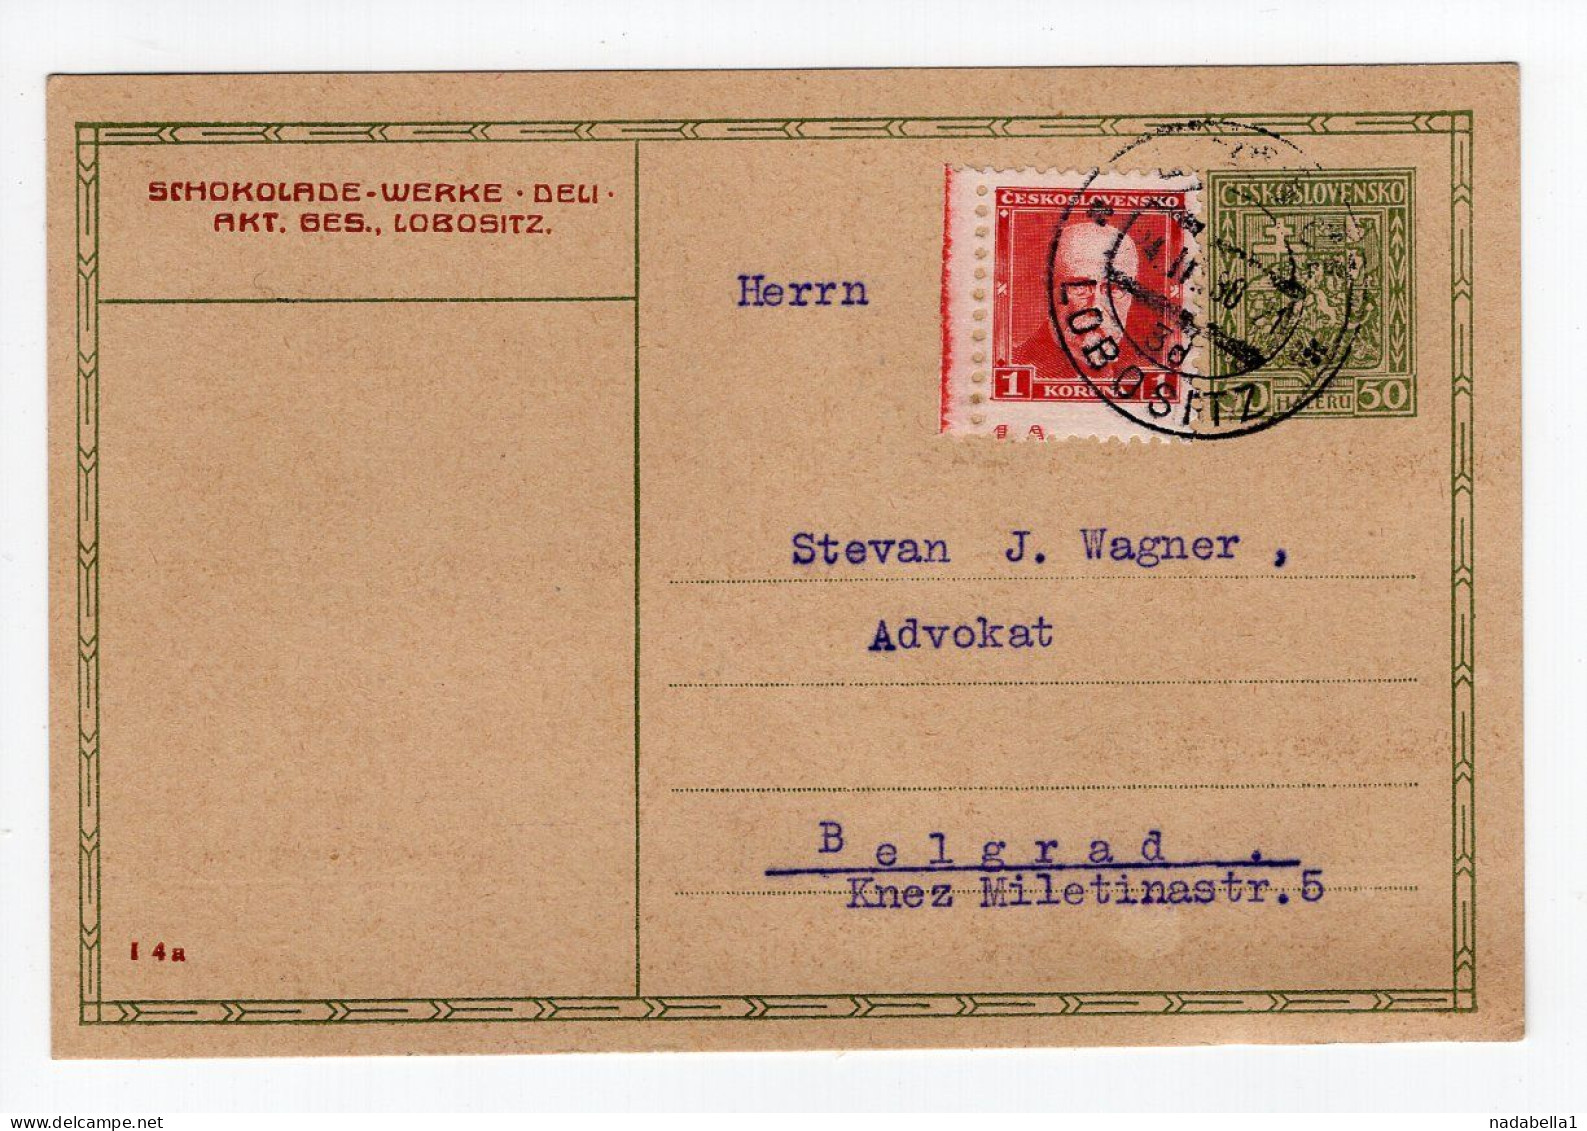 1930. CZECHOSLOVAKIA,LOBOSITZ,DELI CHOCOLATE FACTORY,STATIONERY CARD,USED TO BELGRADE,YUGOSLAVIA - Postcards